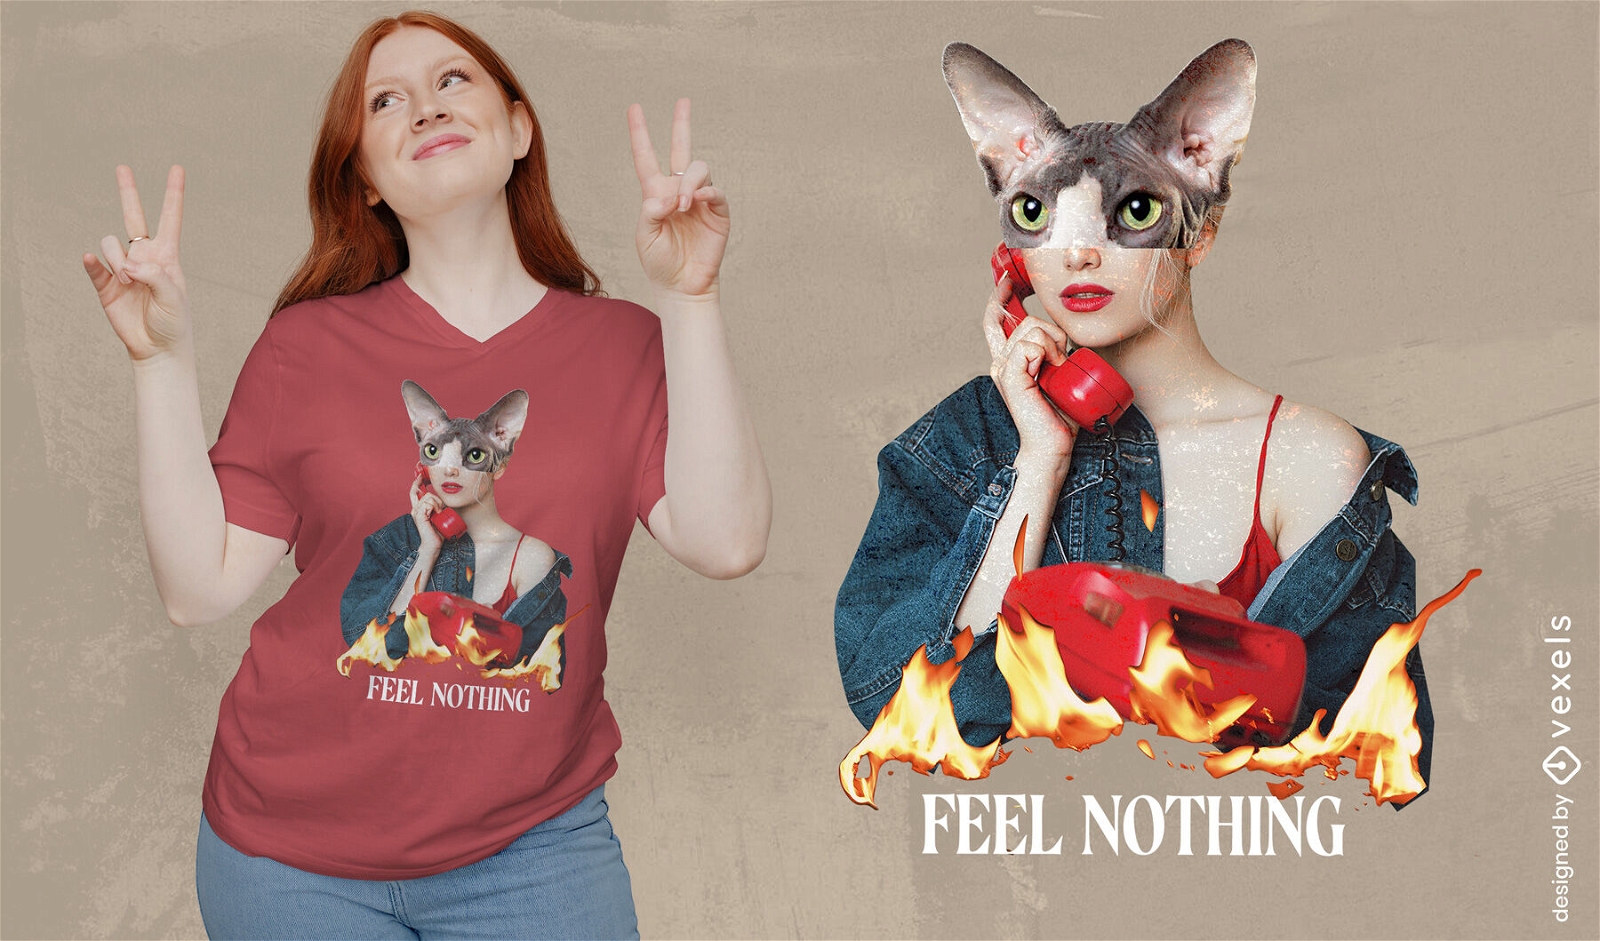 Diseño de camiseta psd de mujer gato sphynx